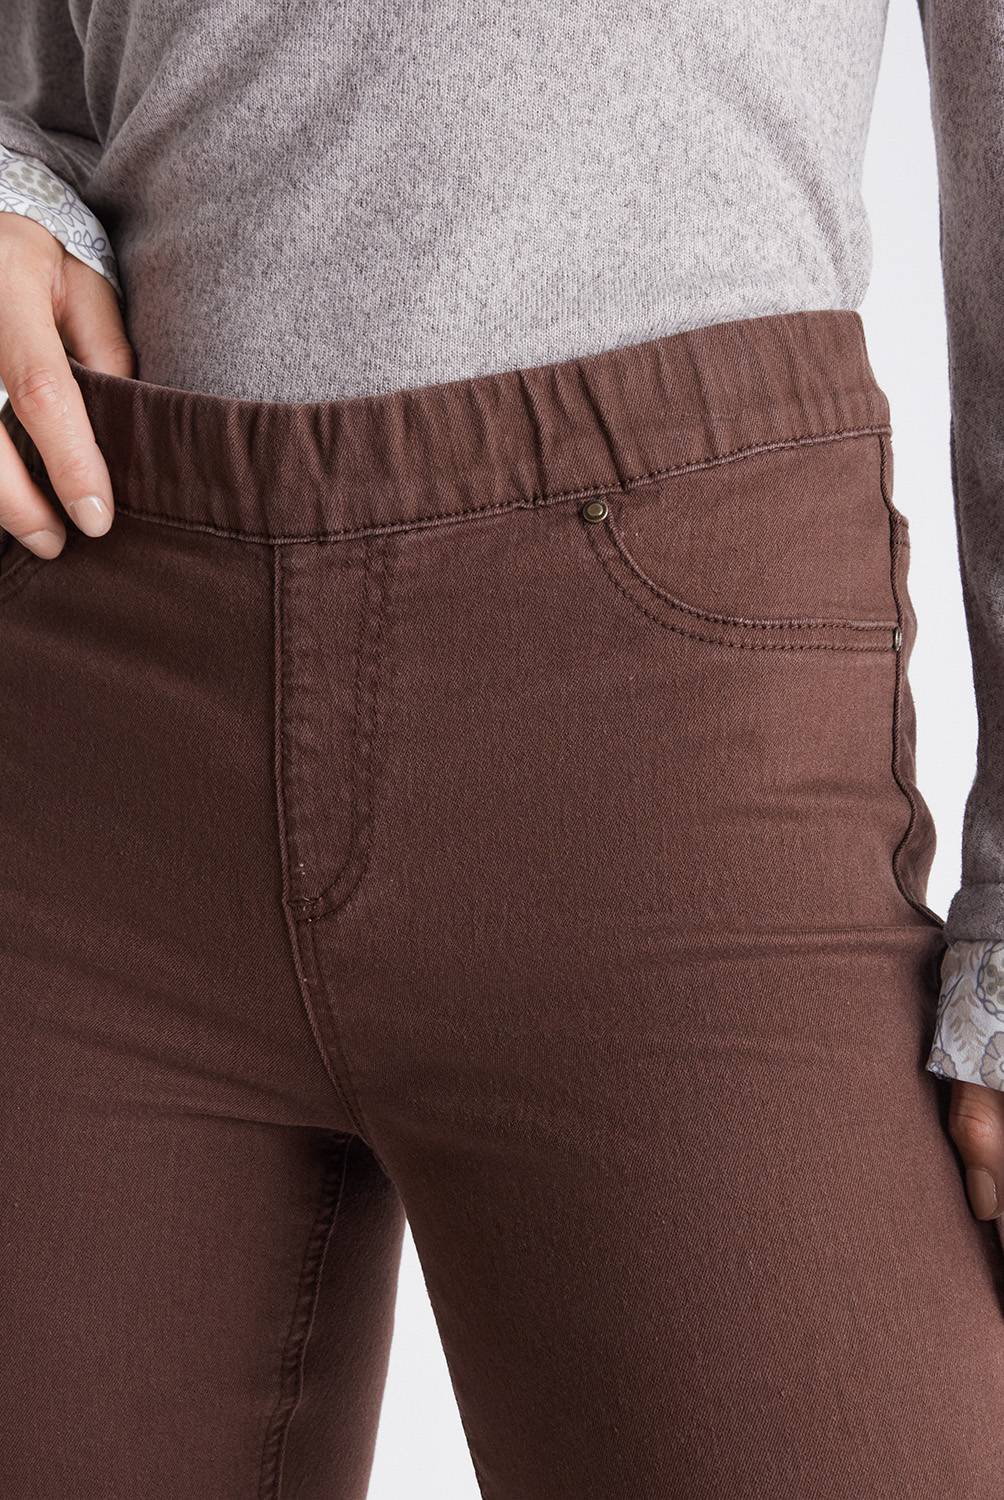 CURVI - Calza De Jeans Con Pretina Elasticada CURVI